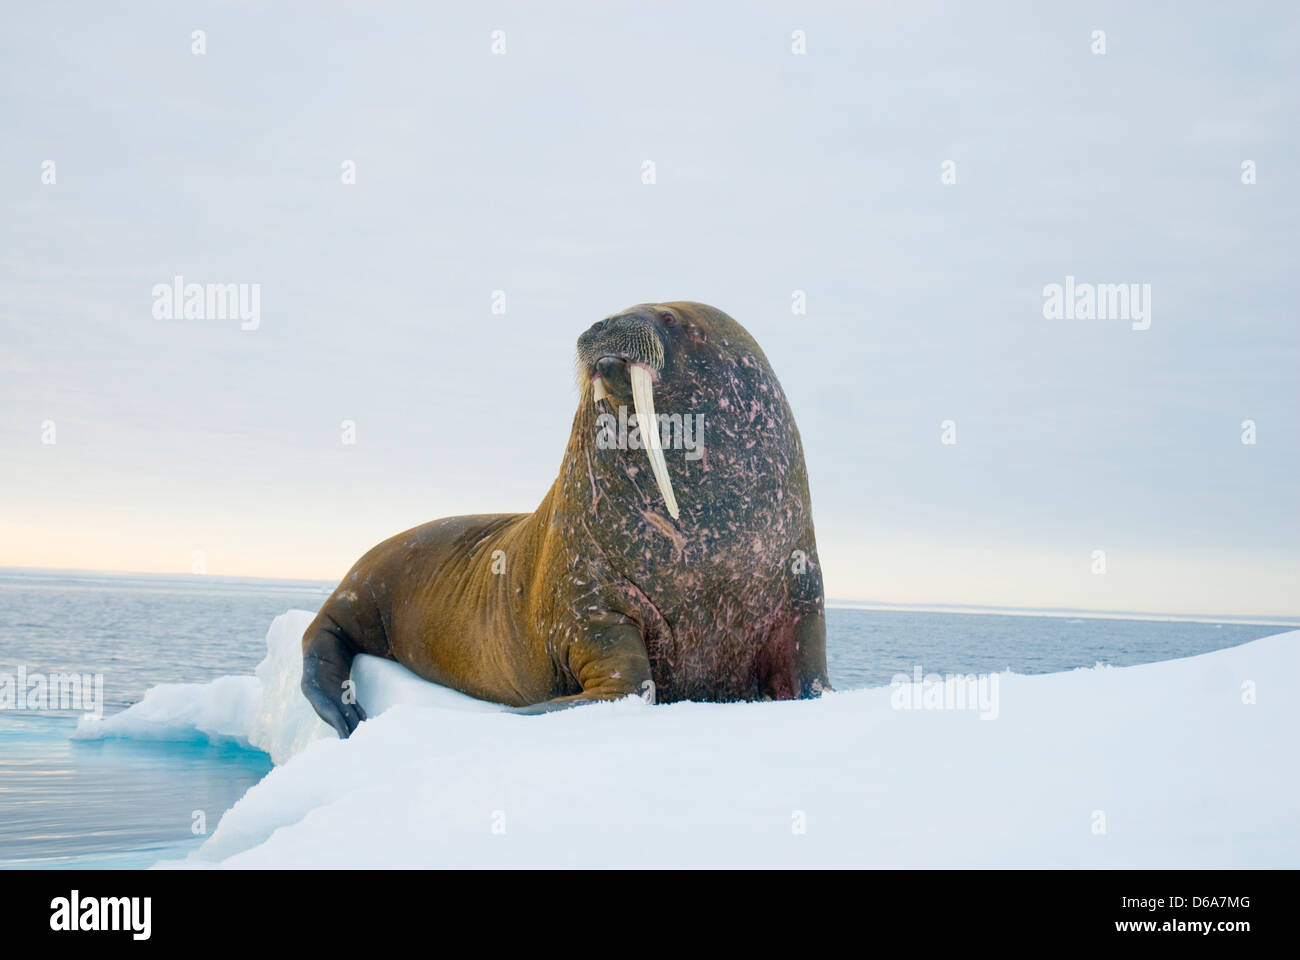 Greenland Sea, Norway, Svalbard Archipelago, Spitsbergen. Walrus, Odobenus rosmarus, bull with one tusk on floating sea ice Stock Photo